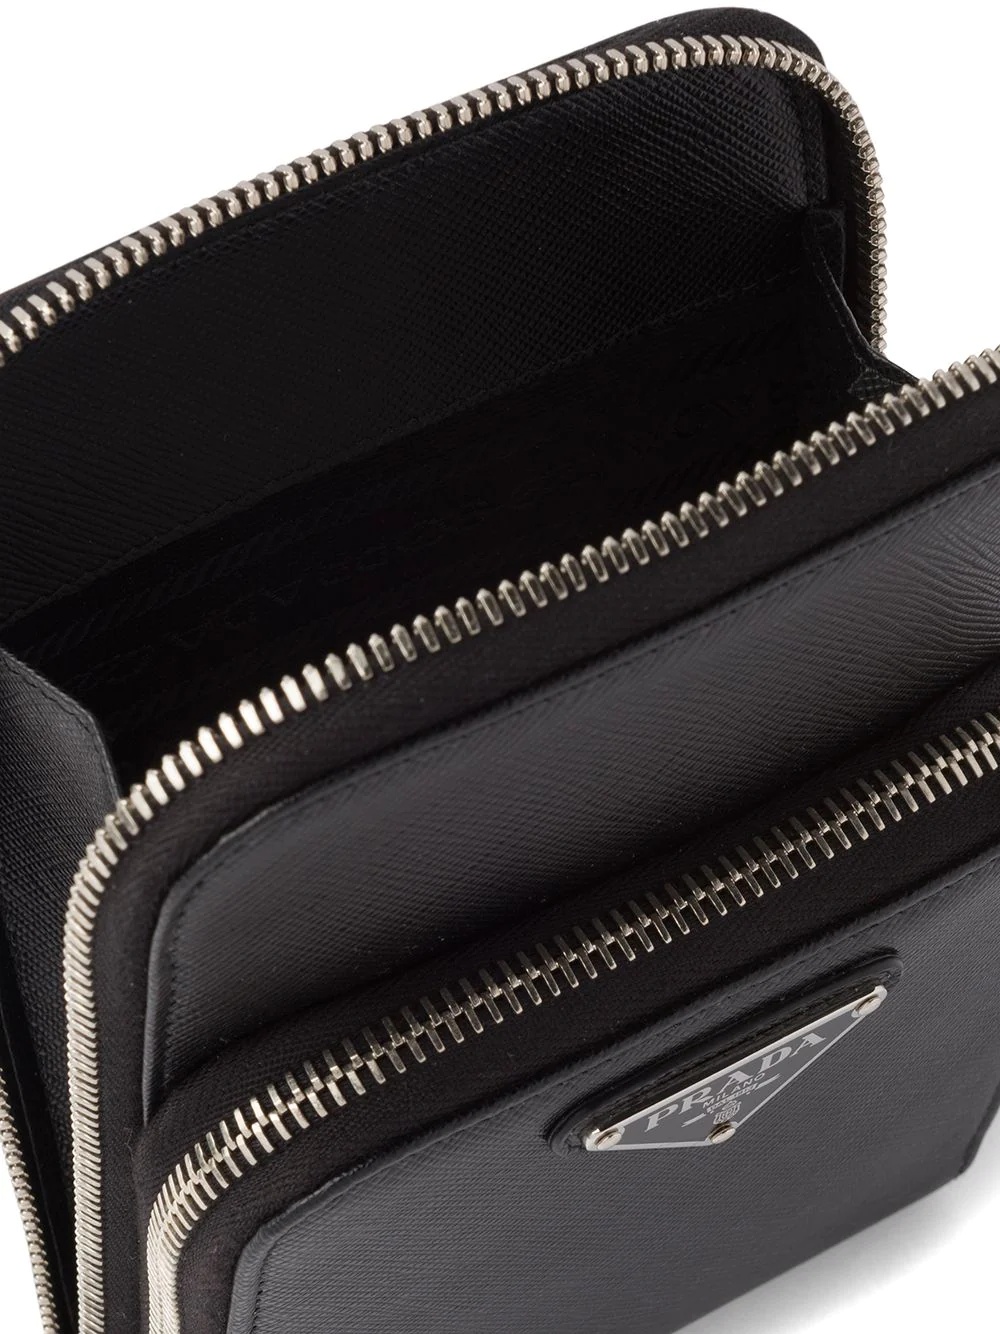 smartphone case pouch bag - 3